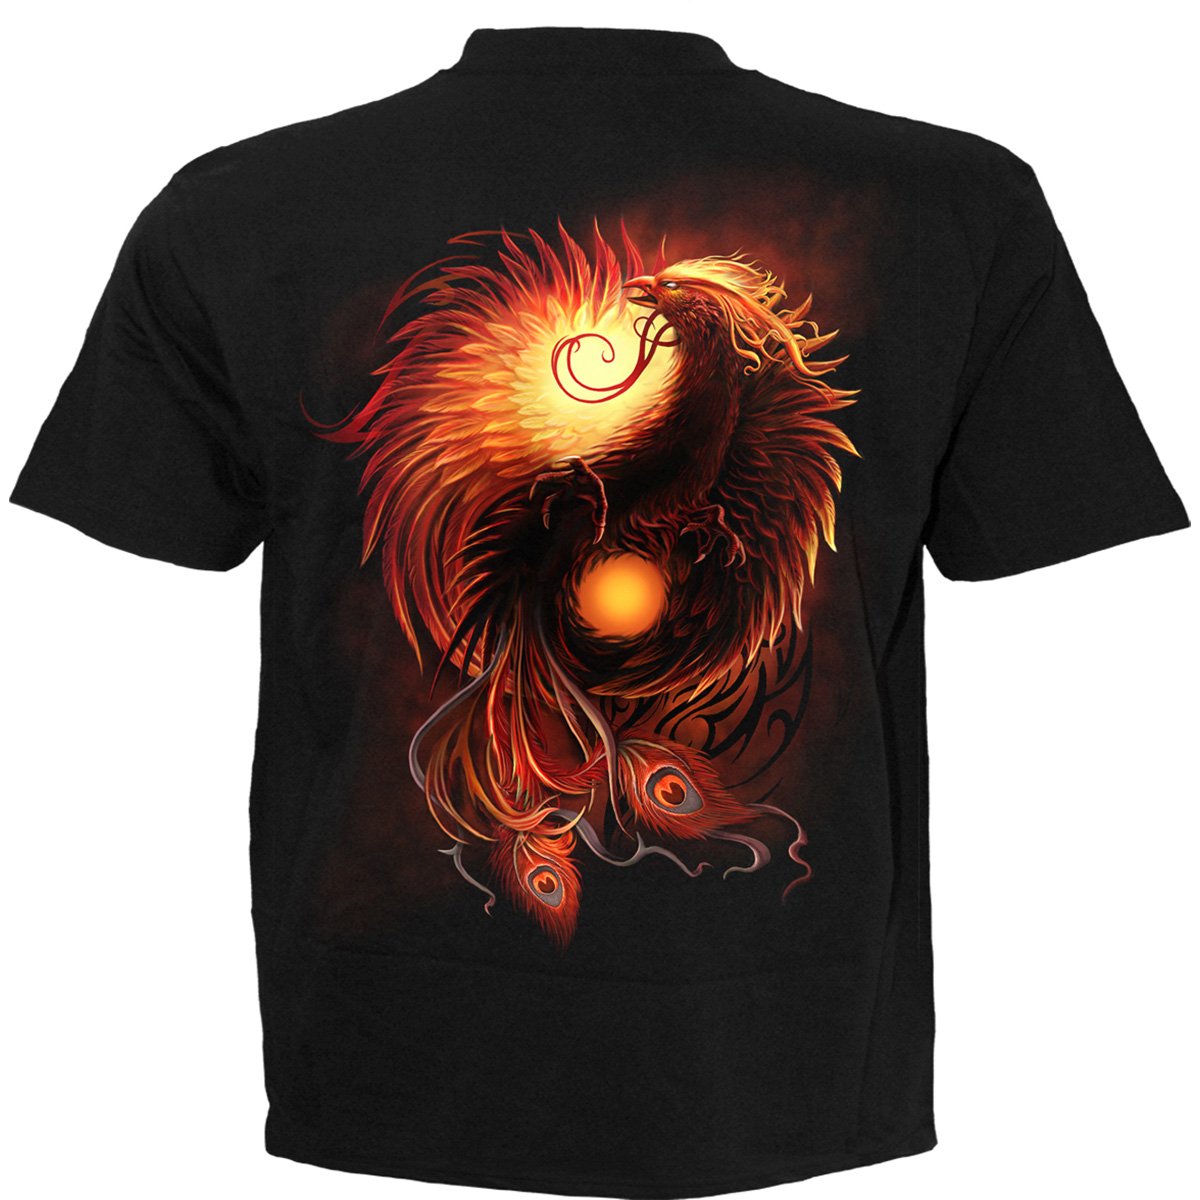 PHOENIX ARISEN - T-Shirt Black - Spiral USA